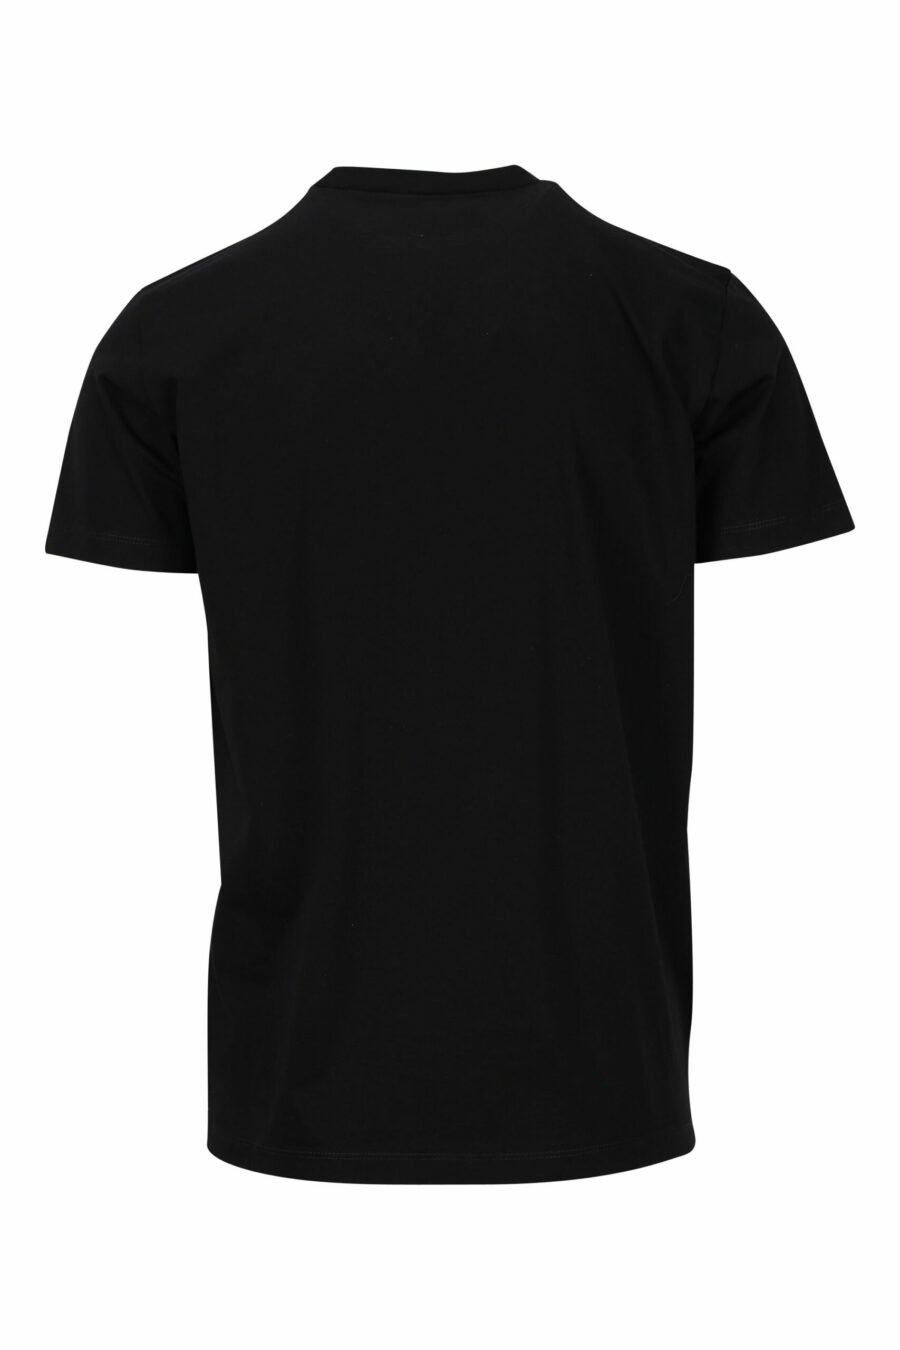 Camiseta negra con maxilogo "college" azul - 8054148086510 1 scaled